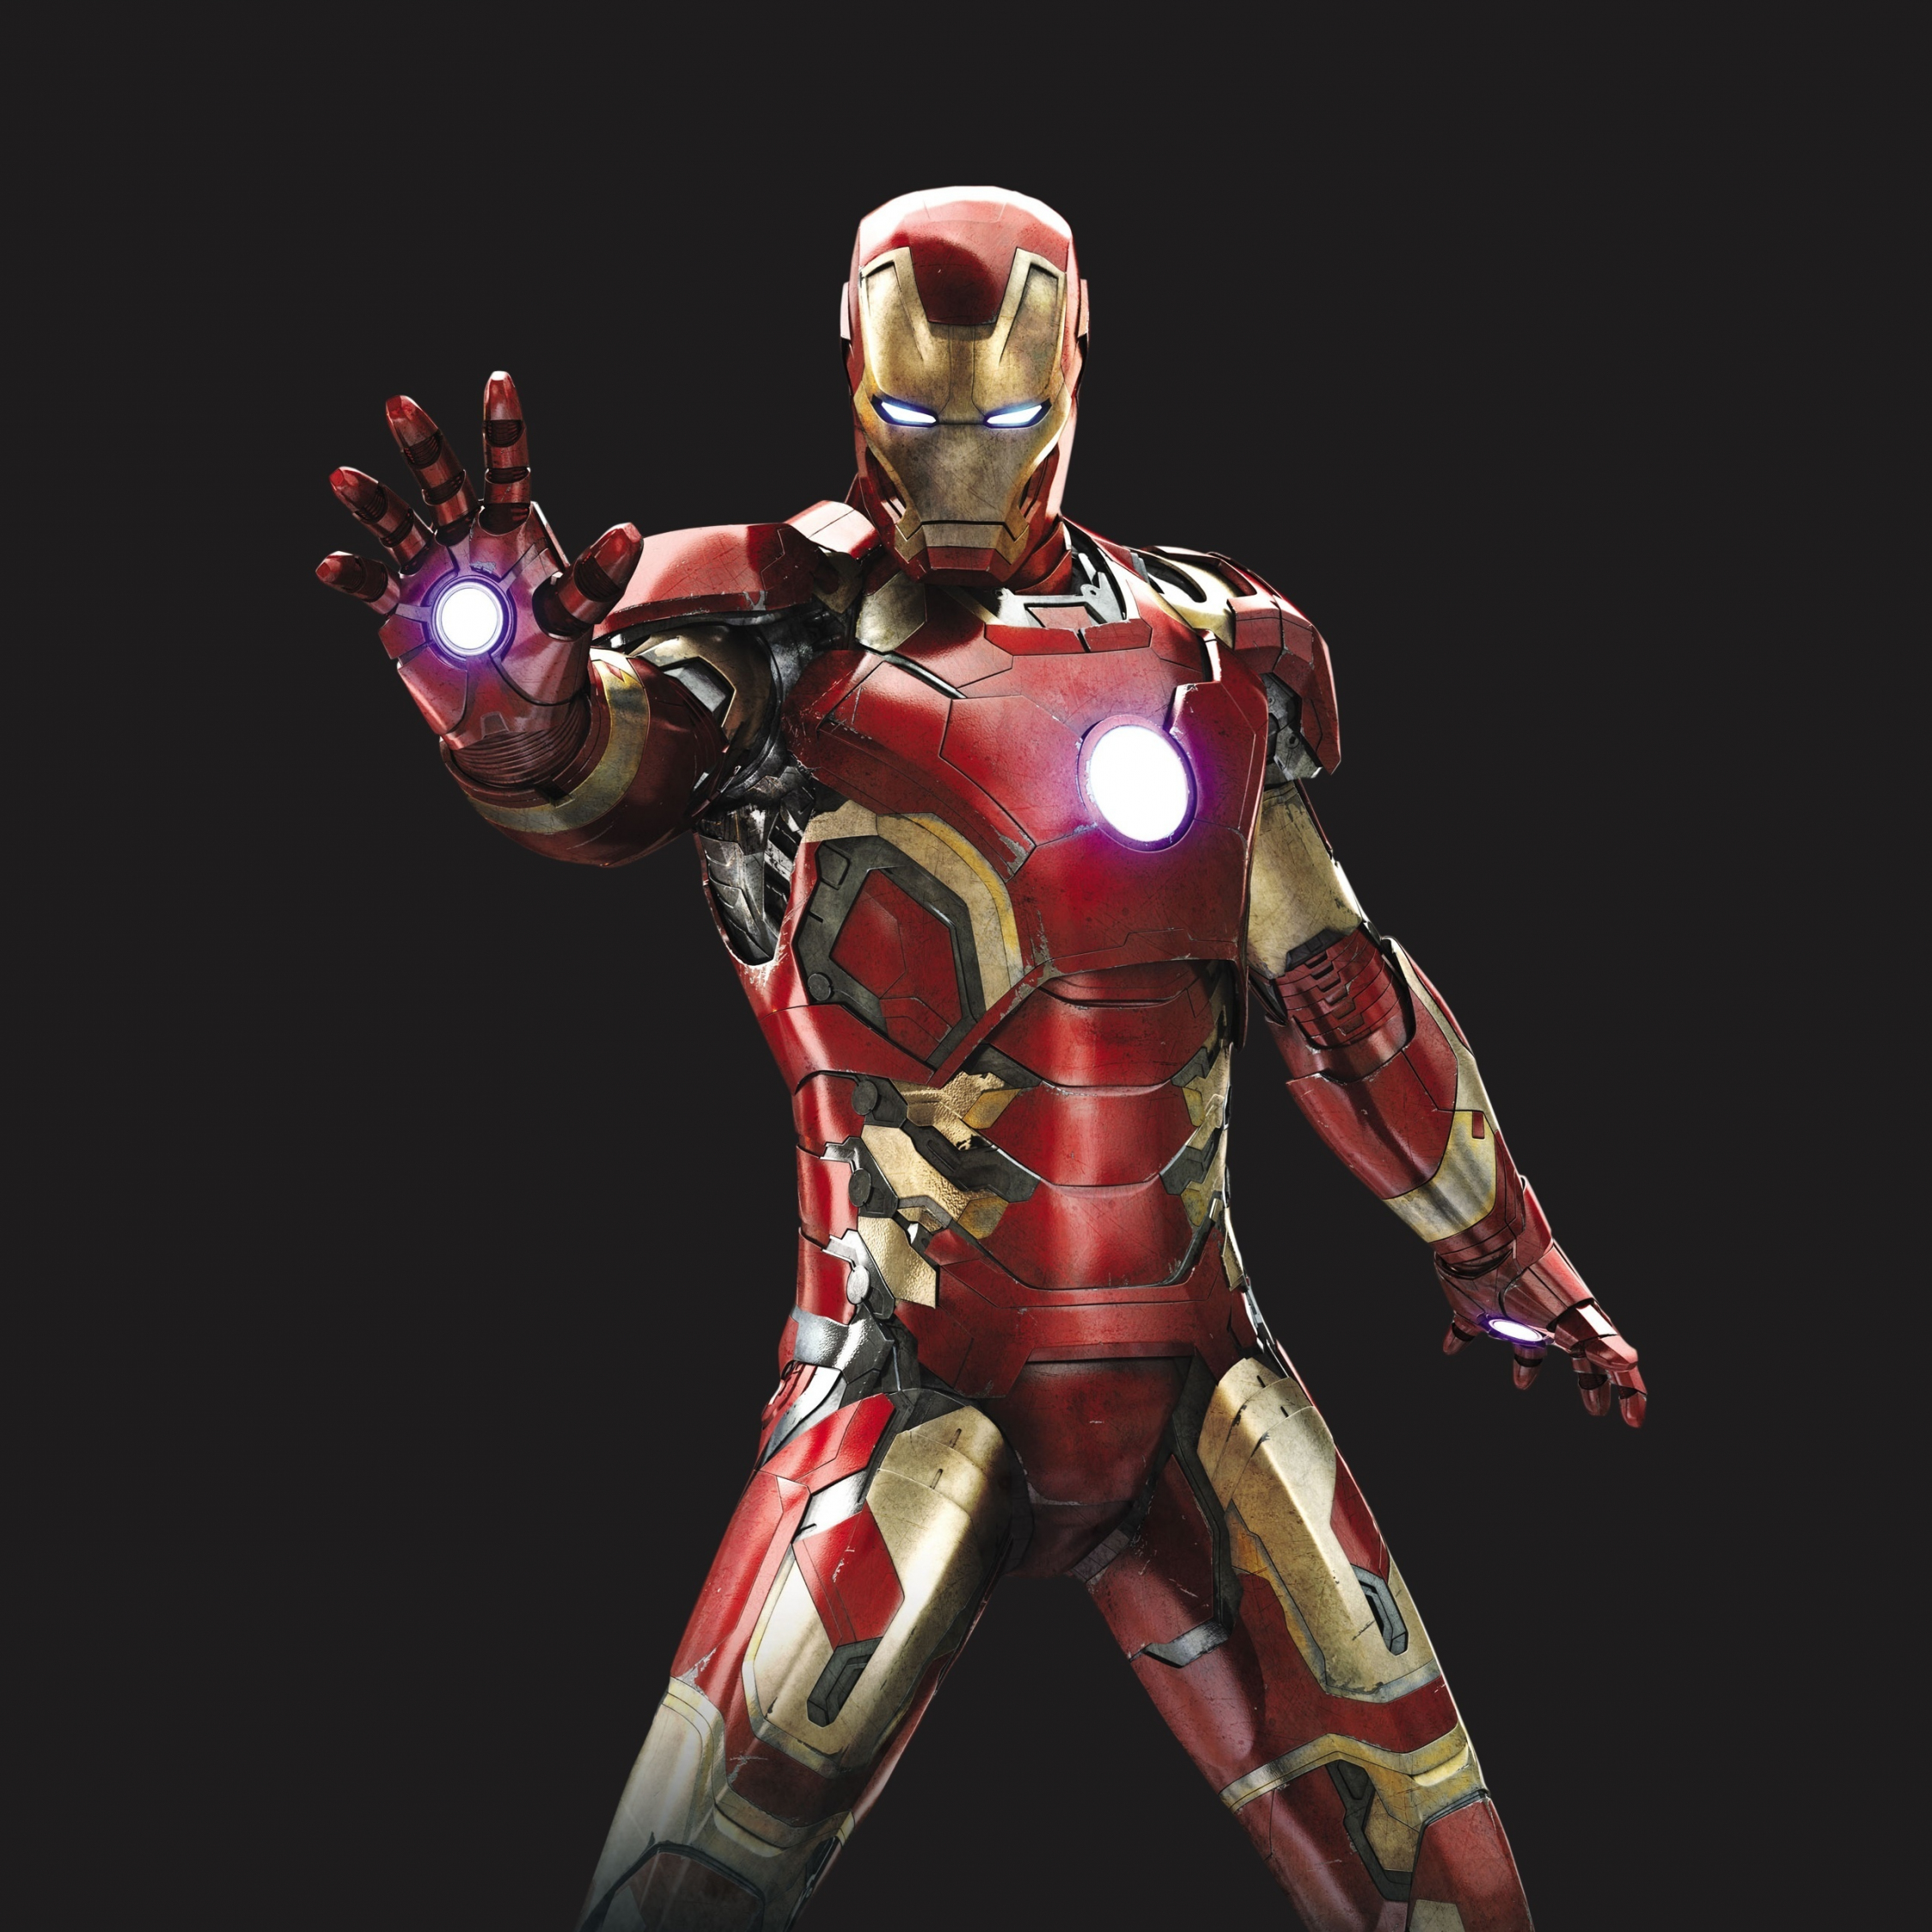 Download Iron Man Iron Suit Superhero Minimal 2248x2248 Wallpaper Ipad Air Ipad Air 2 Ipad 3 Ipad 4 Ipad Mini 2 Ipad Mini 3 2248x2248 Hd Image Background